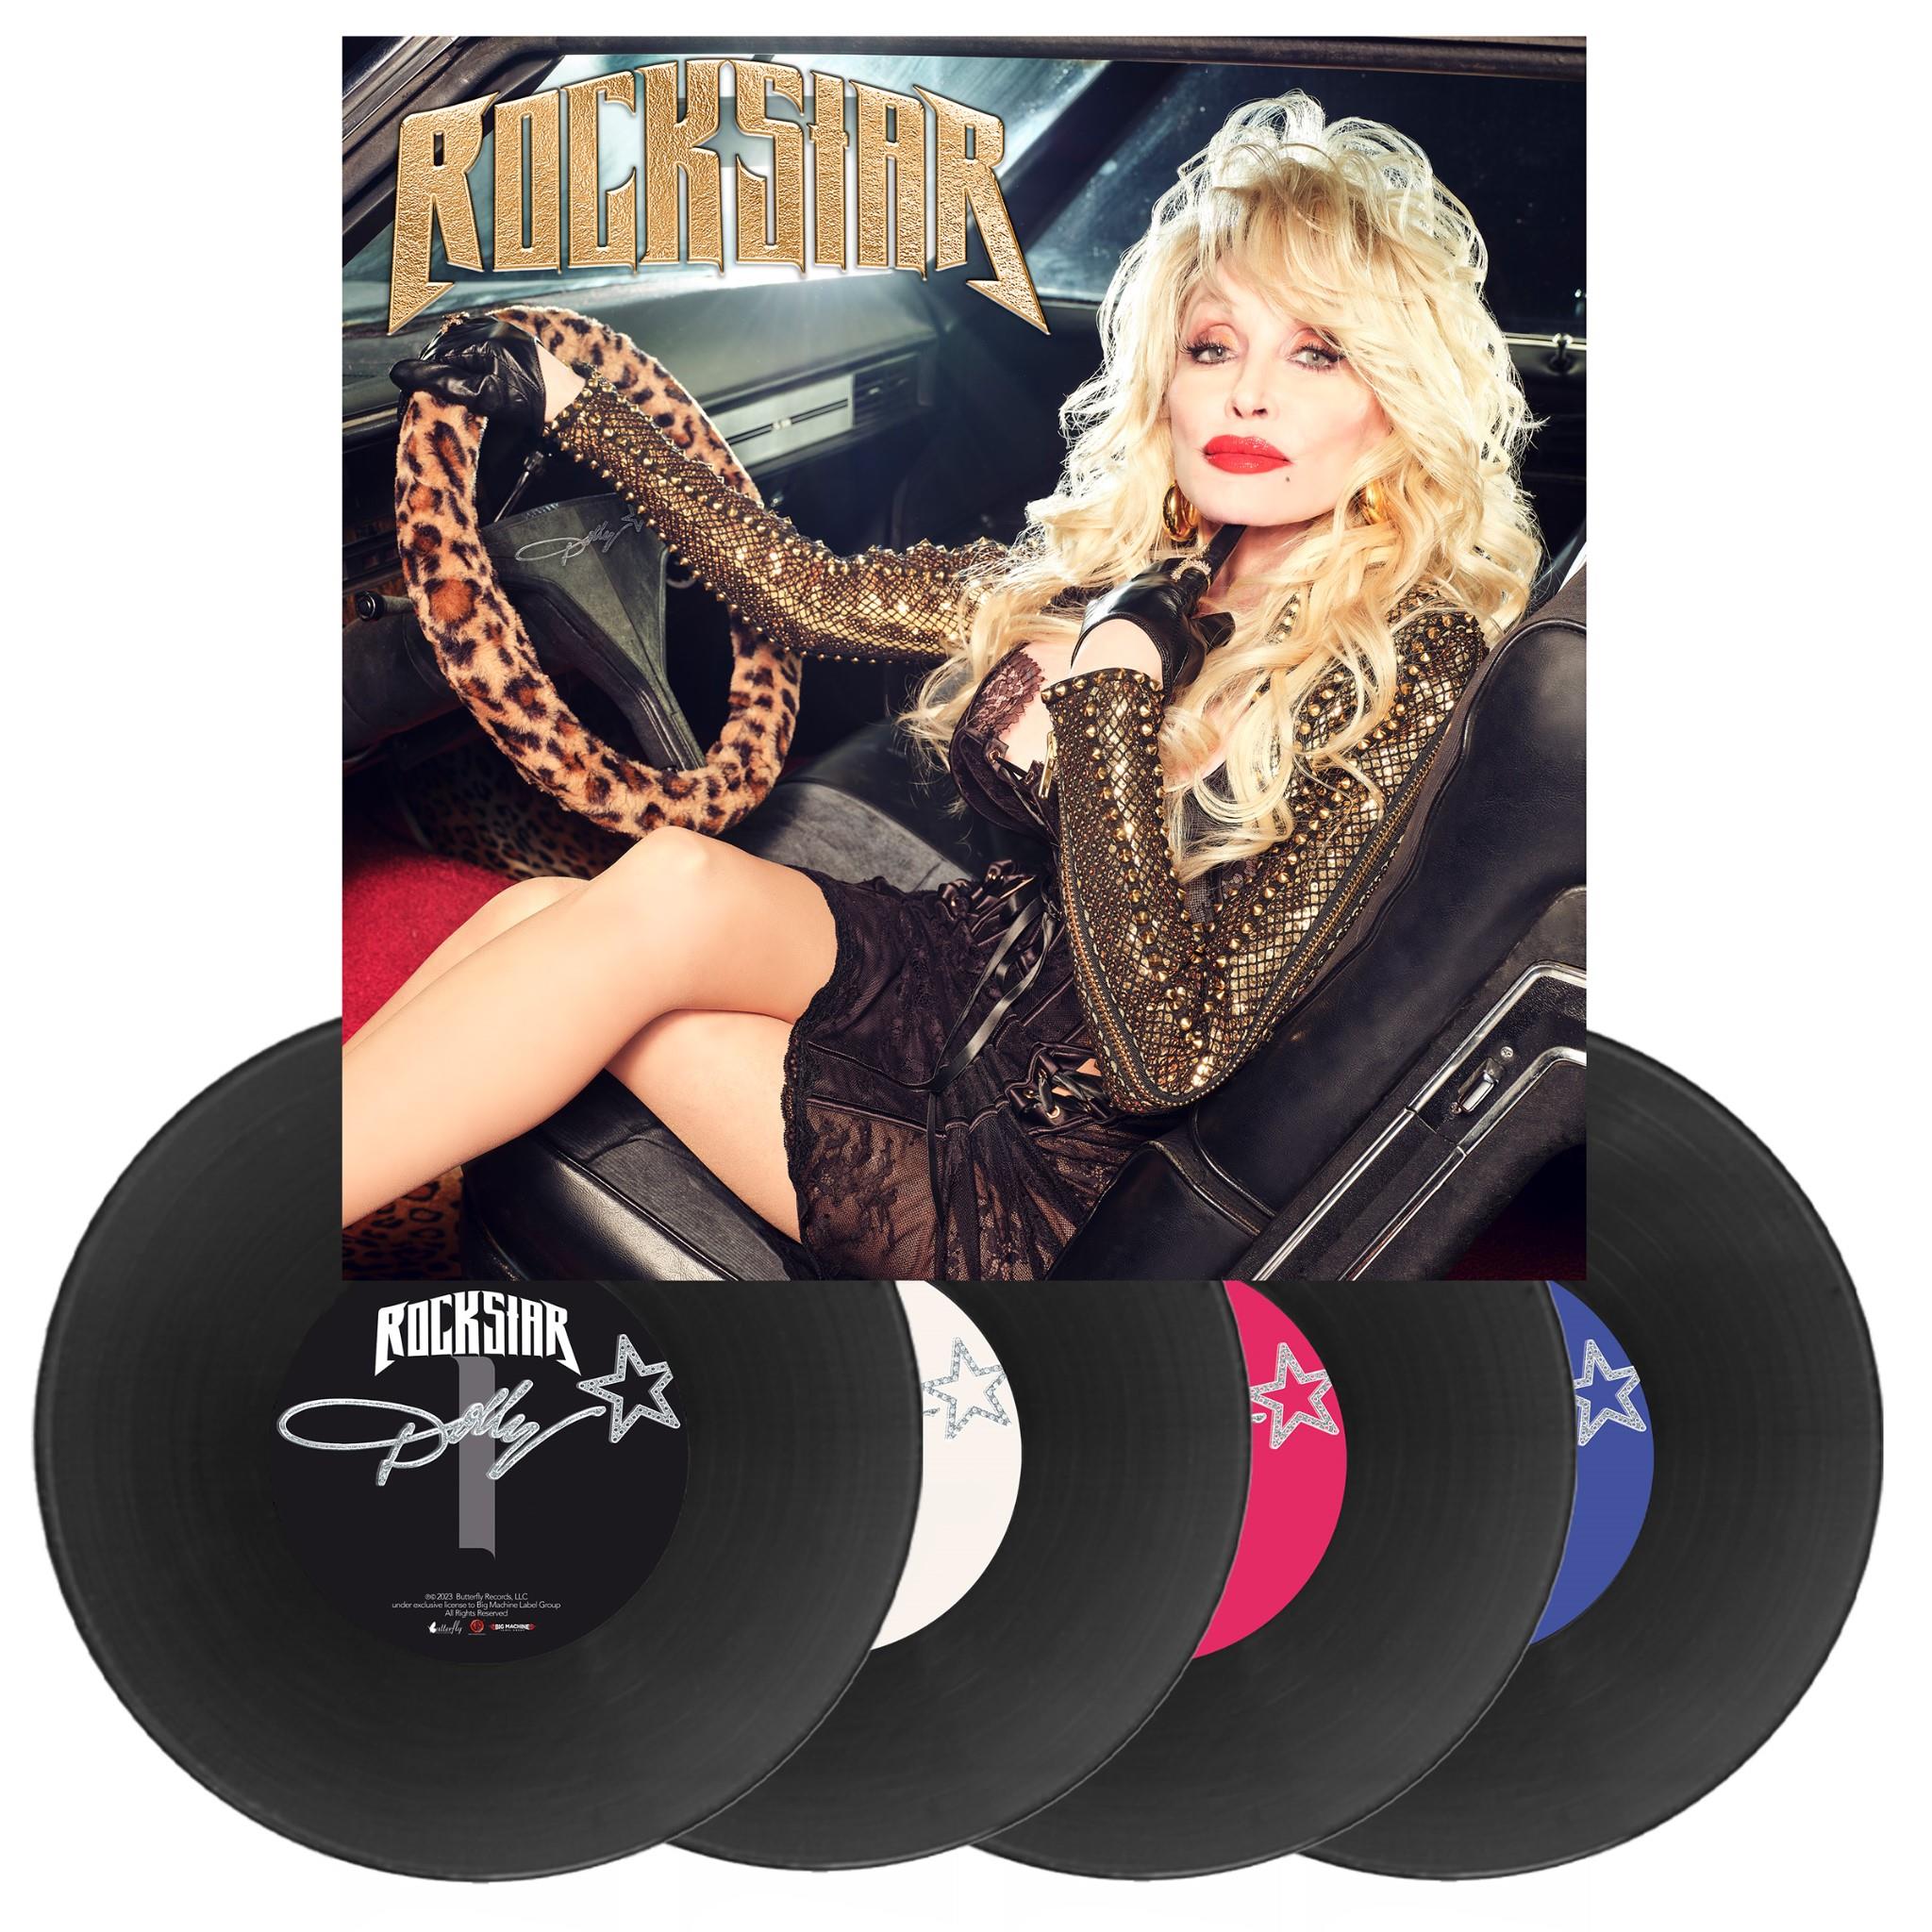 Disque vinyle 33 tours The Great Dolly Parton